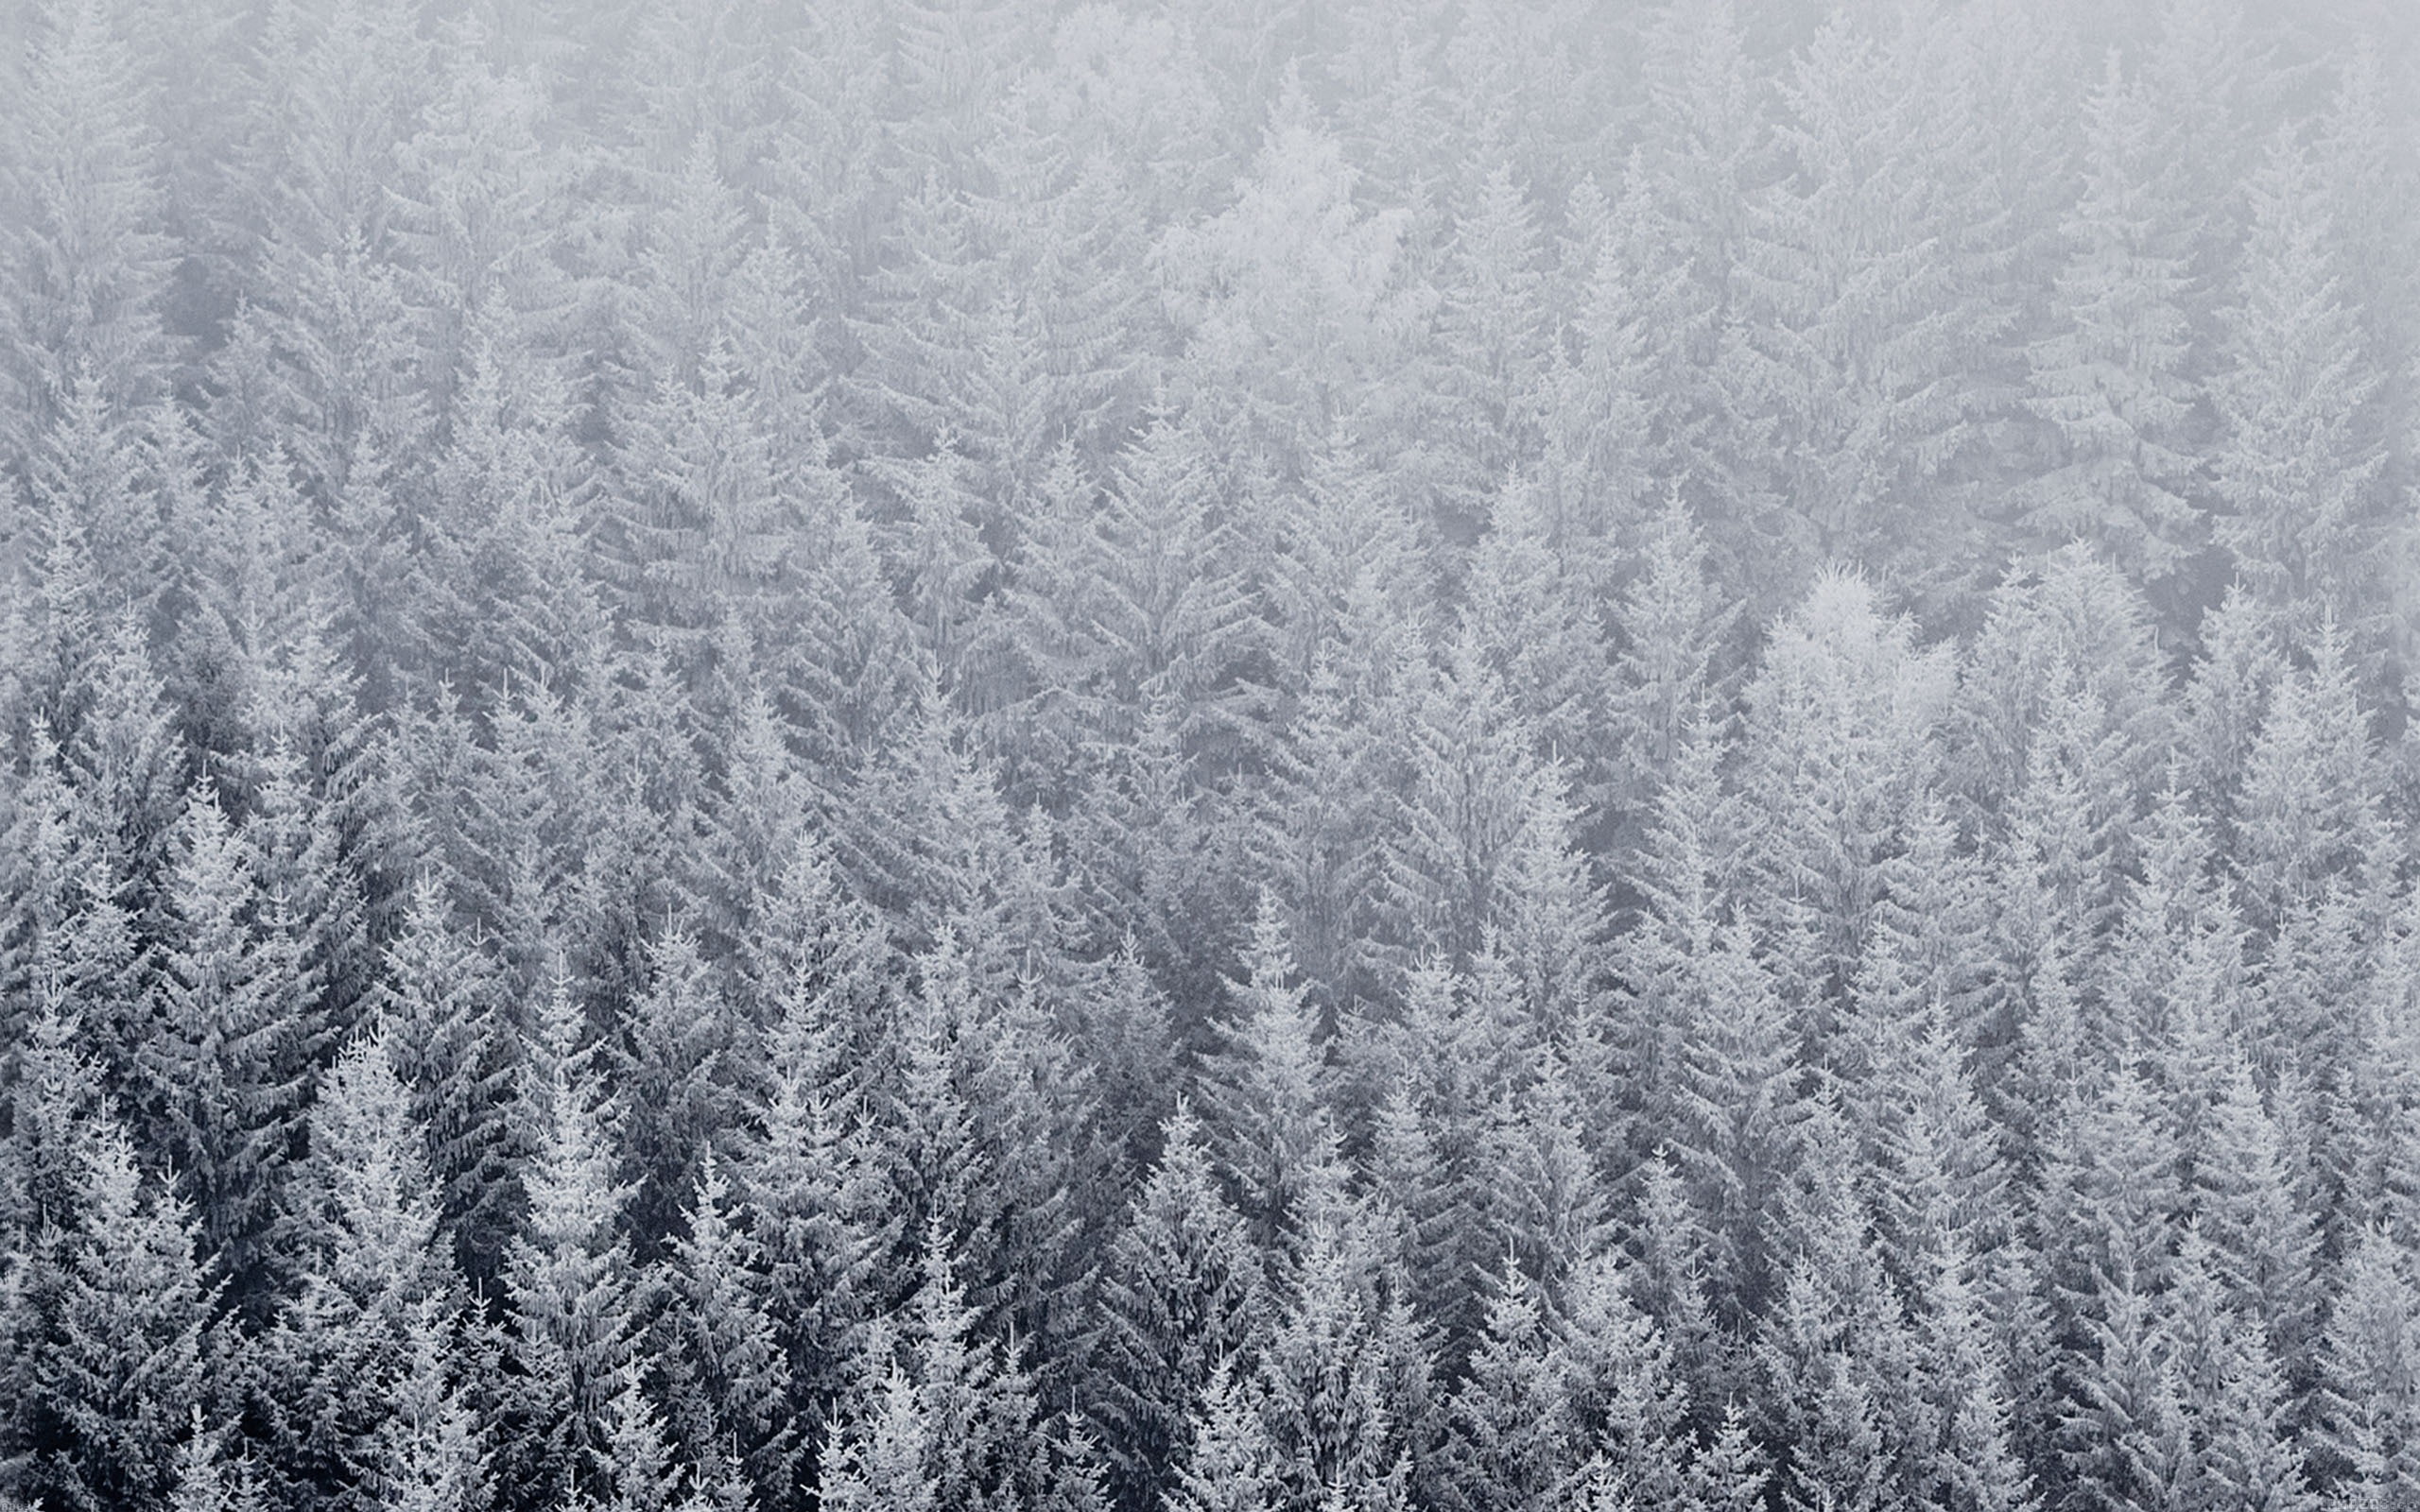 snow mountain-Apple iOS8 iPhone6 Plus HD Wallpaper, green trees